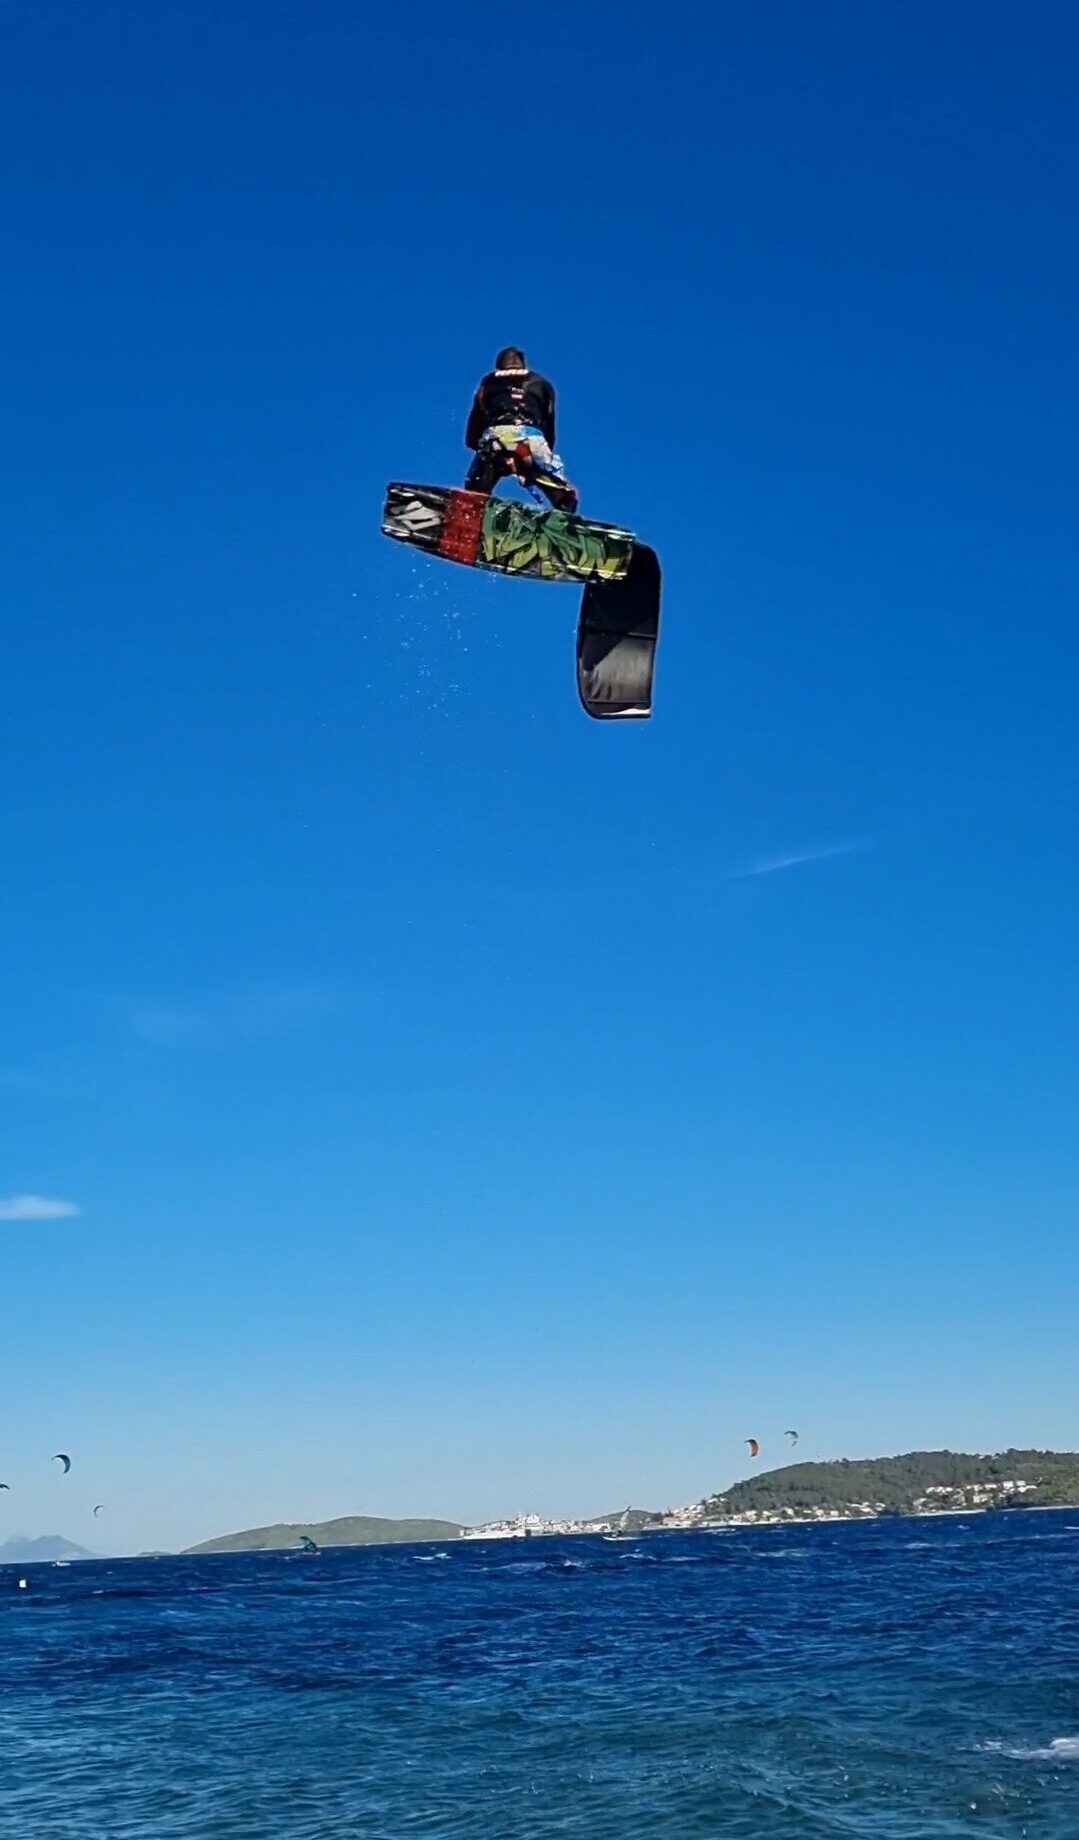 A very high kitesurf jumo